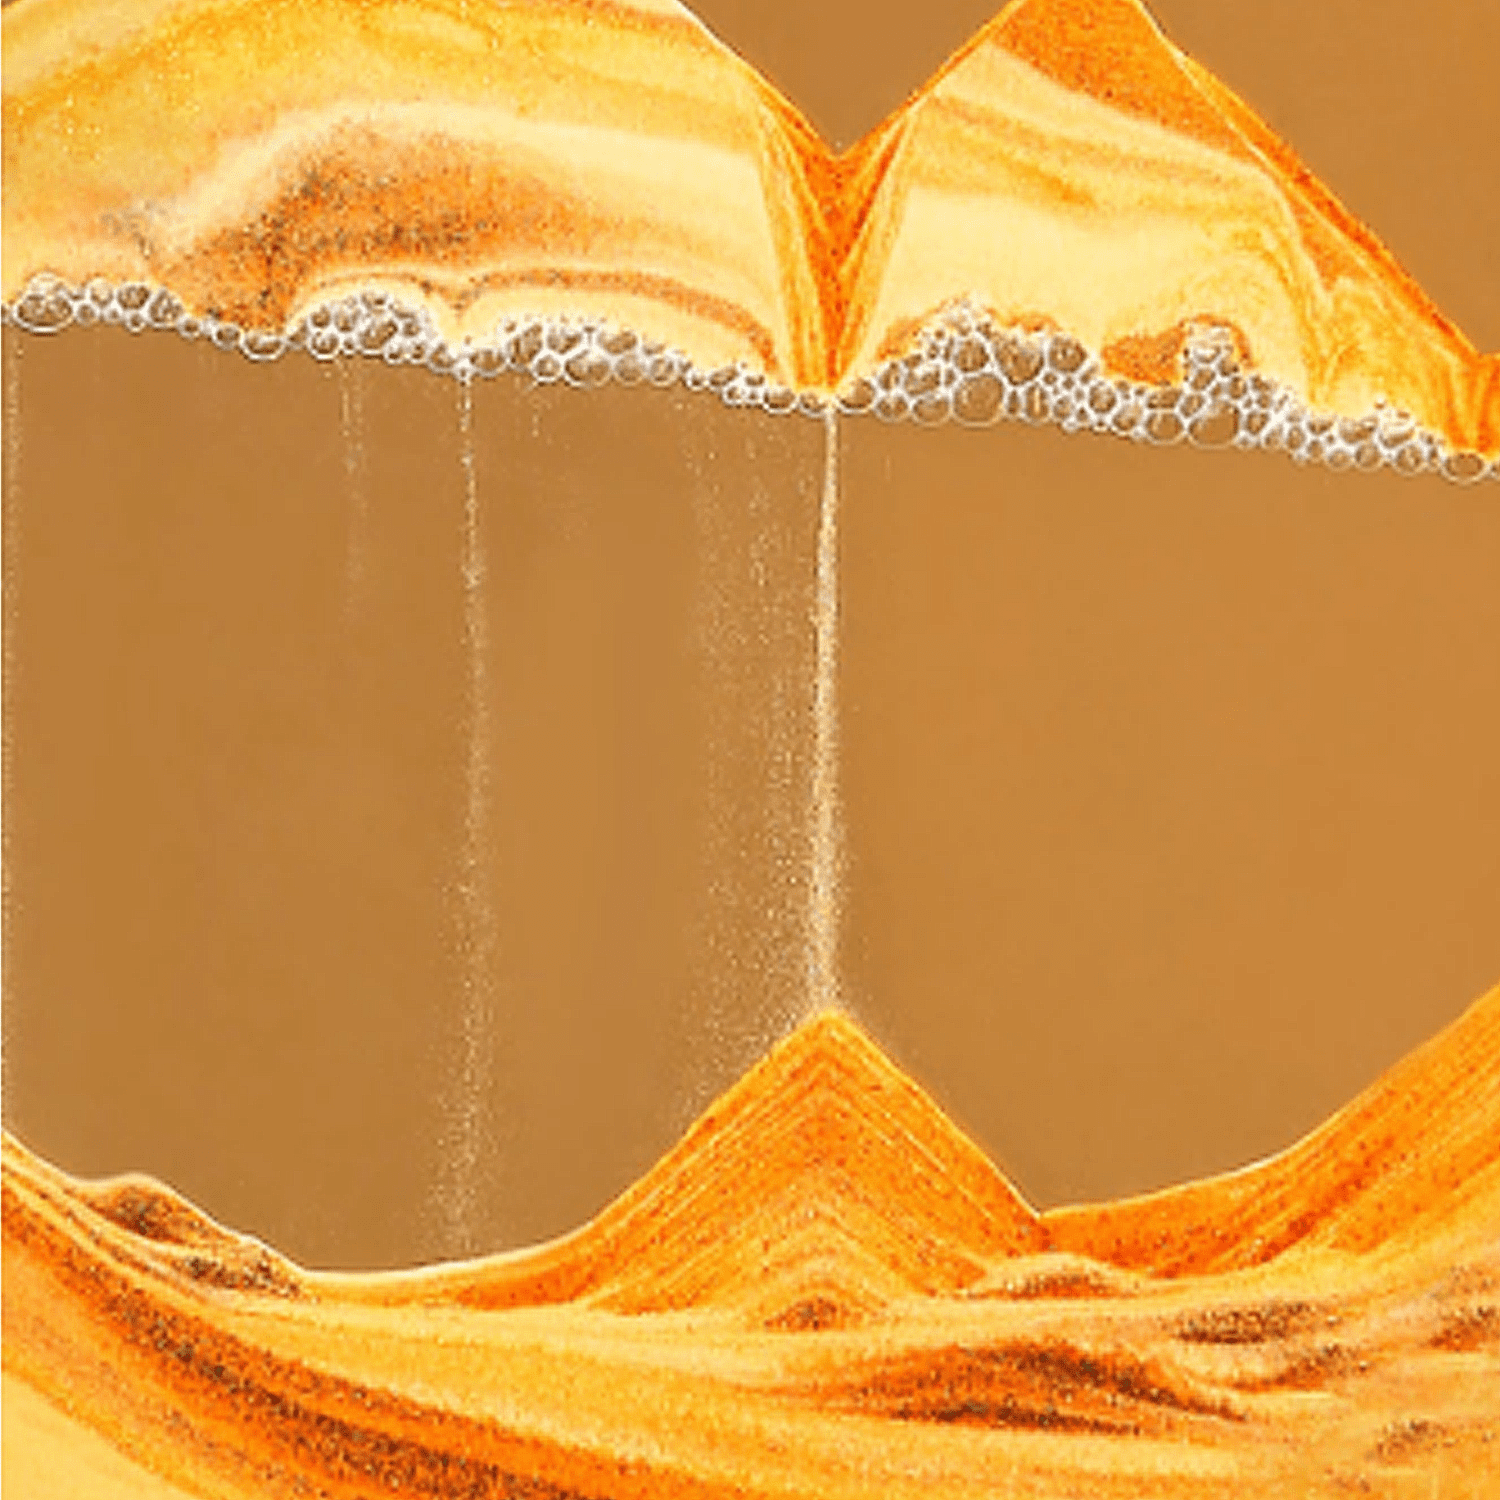 Sandscape Moving Sand Art 12 Inches - Home Decor